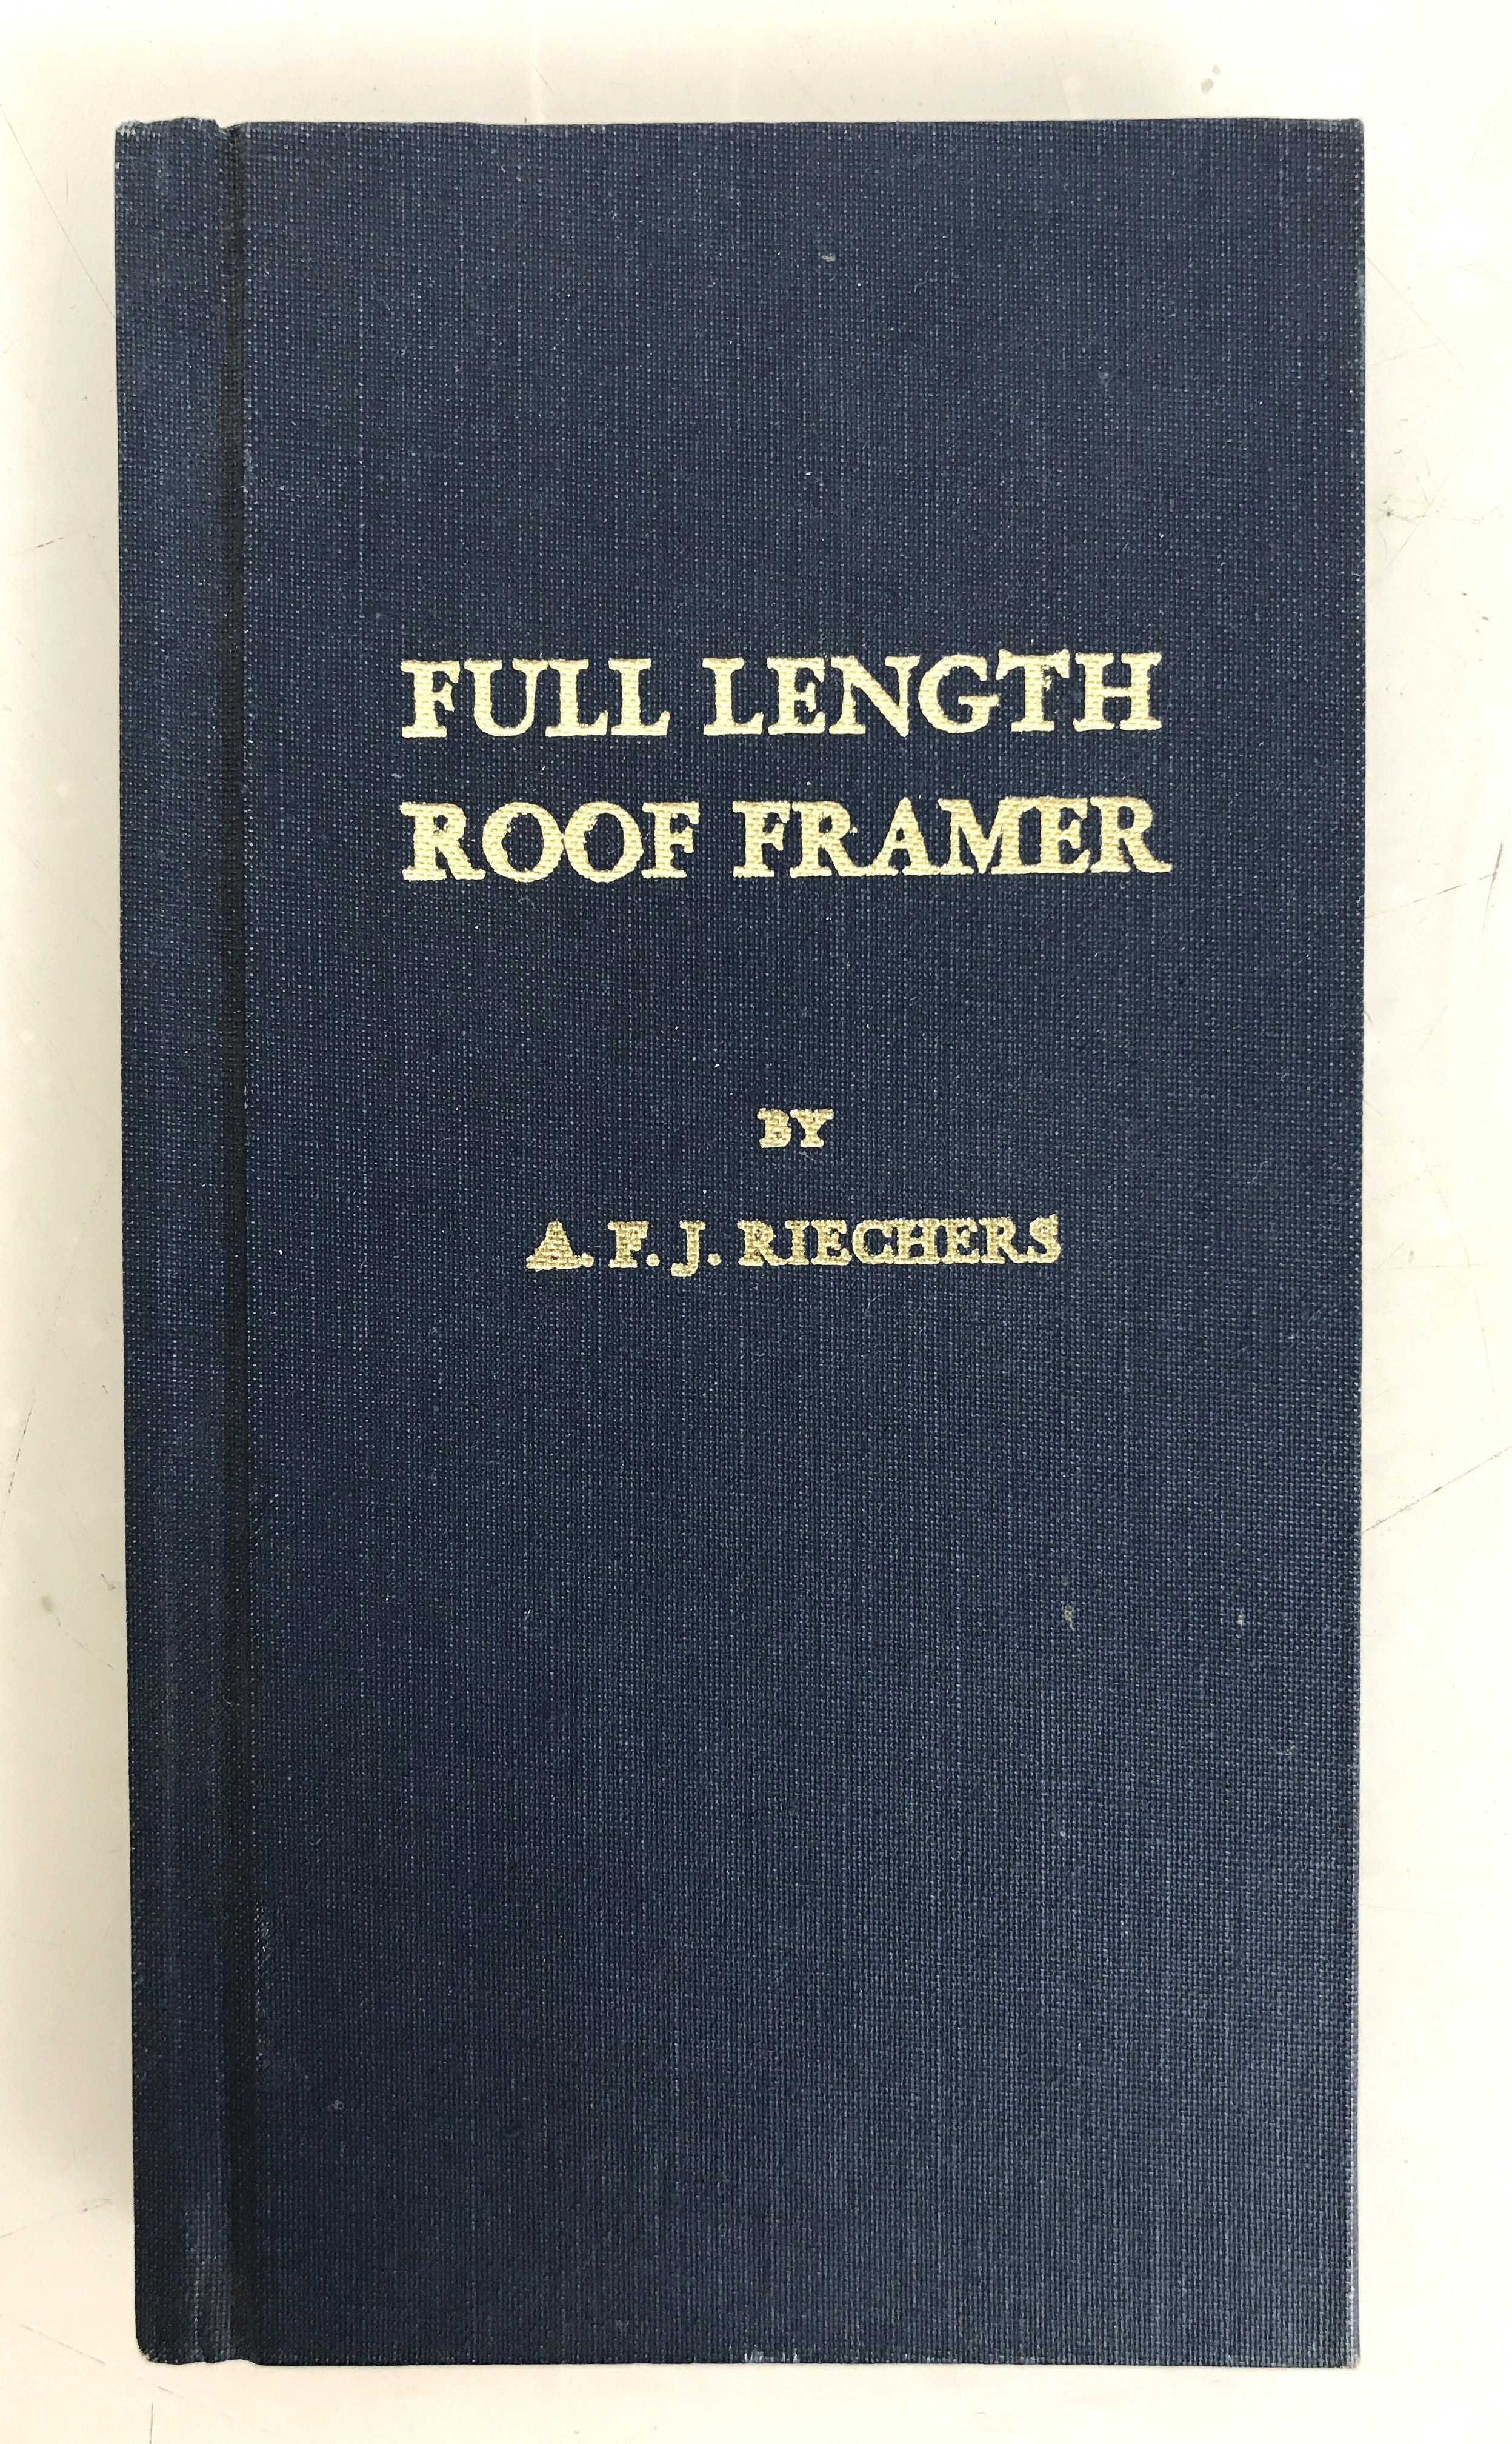 Full Length Roof Framer by A.F.J. Riechers 1969 HC